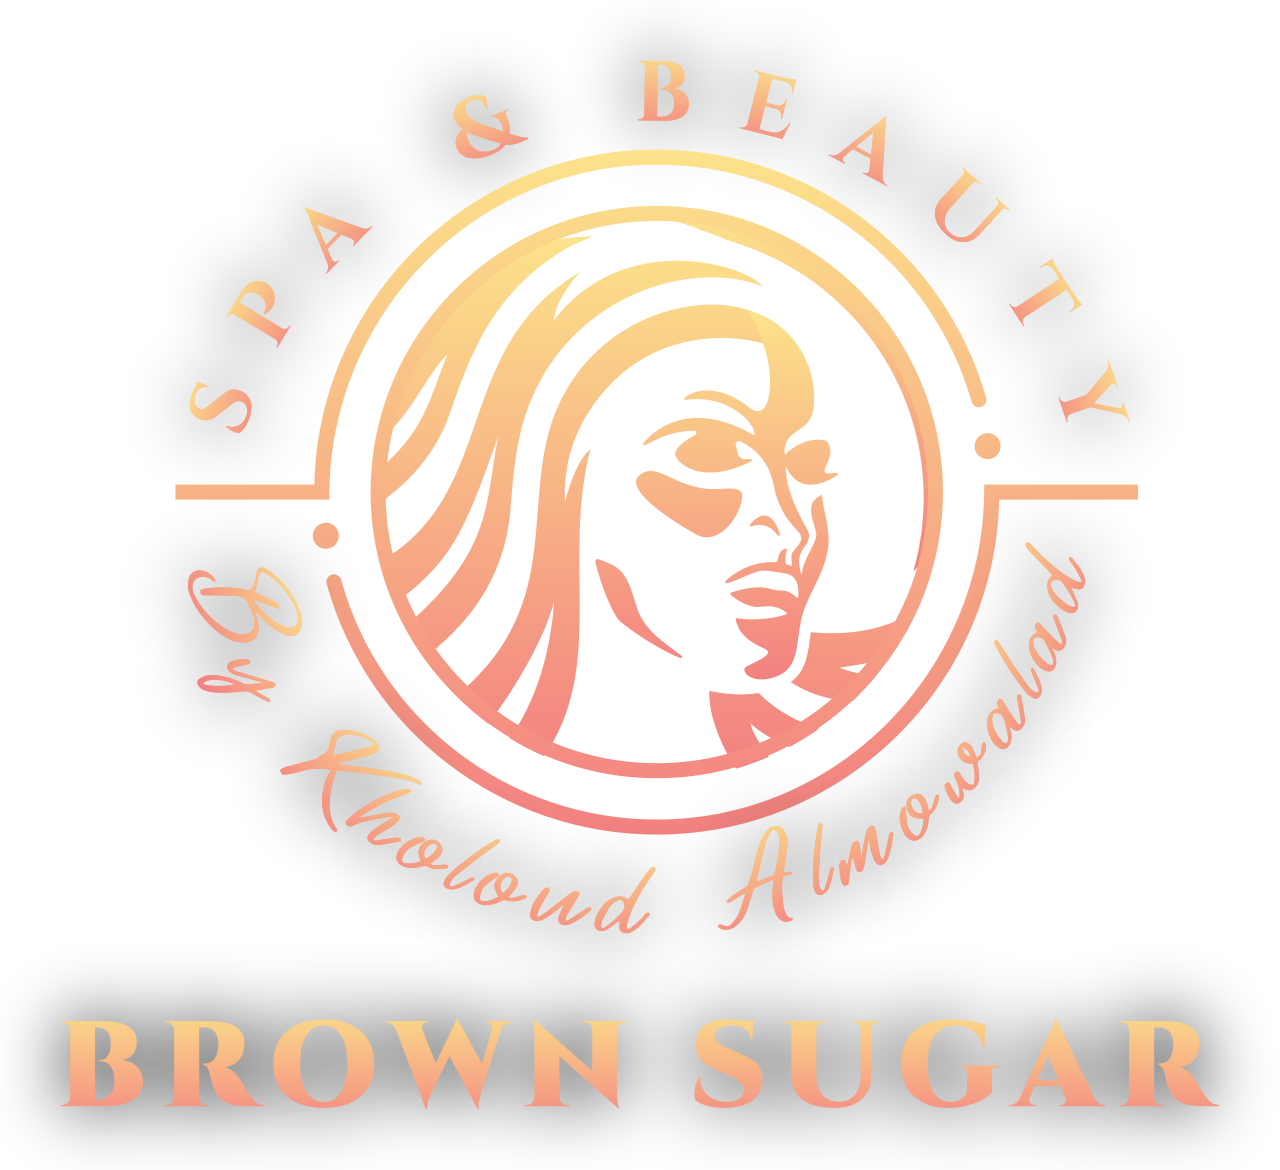 Brown Sugar 's logo